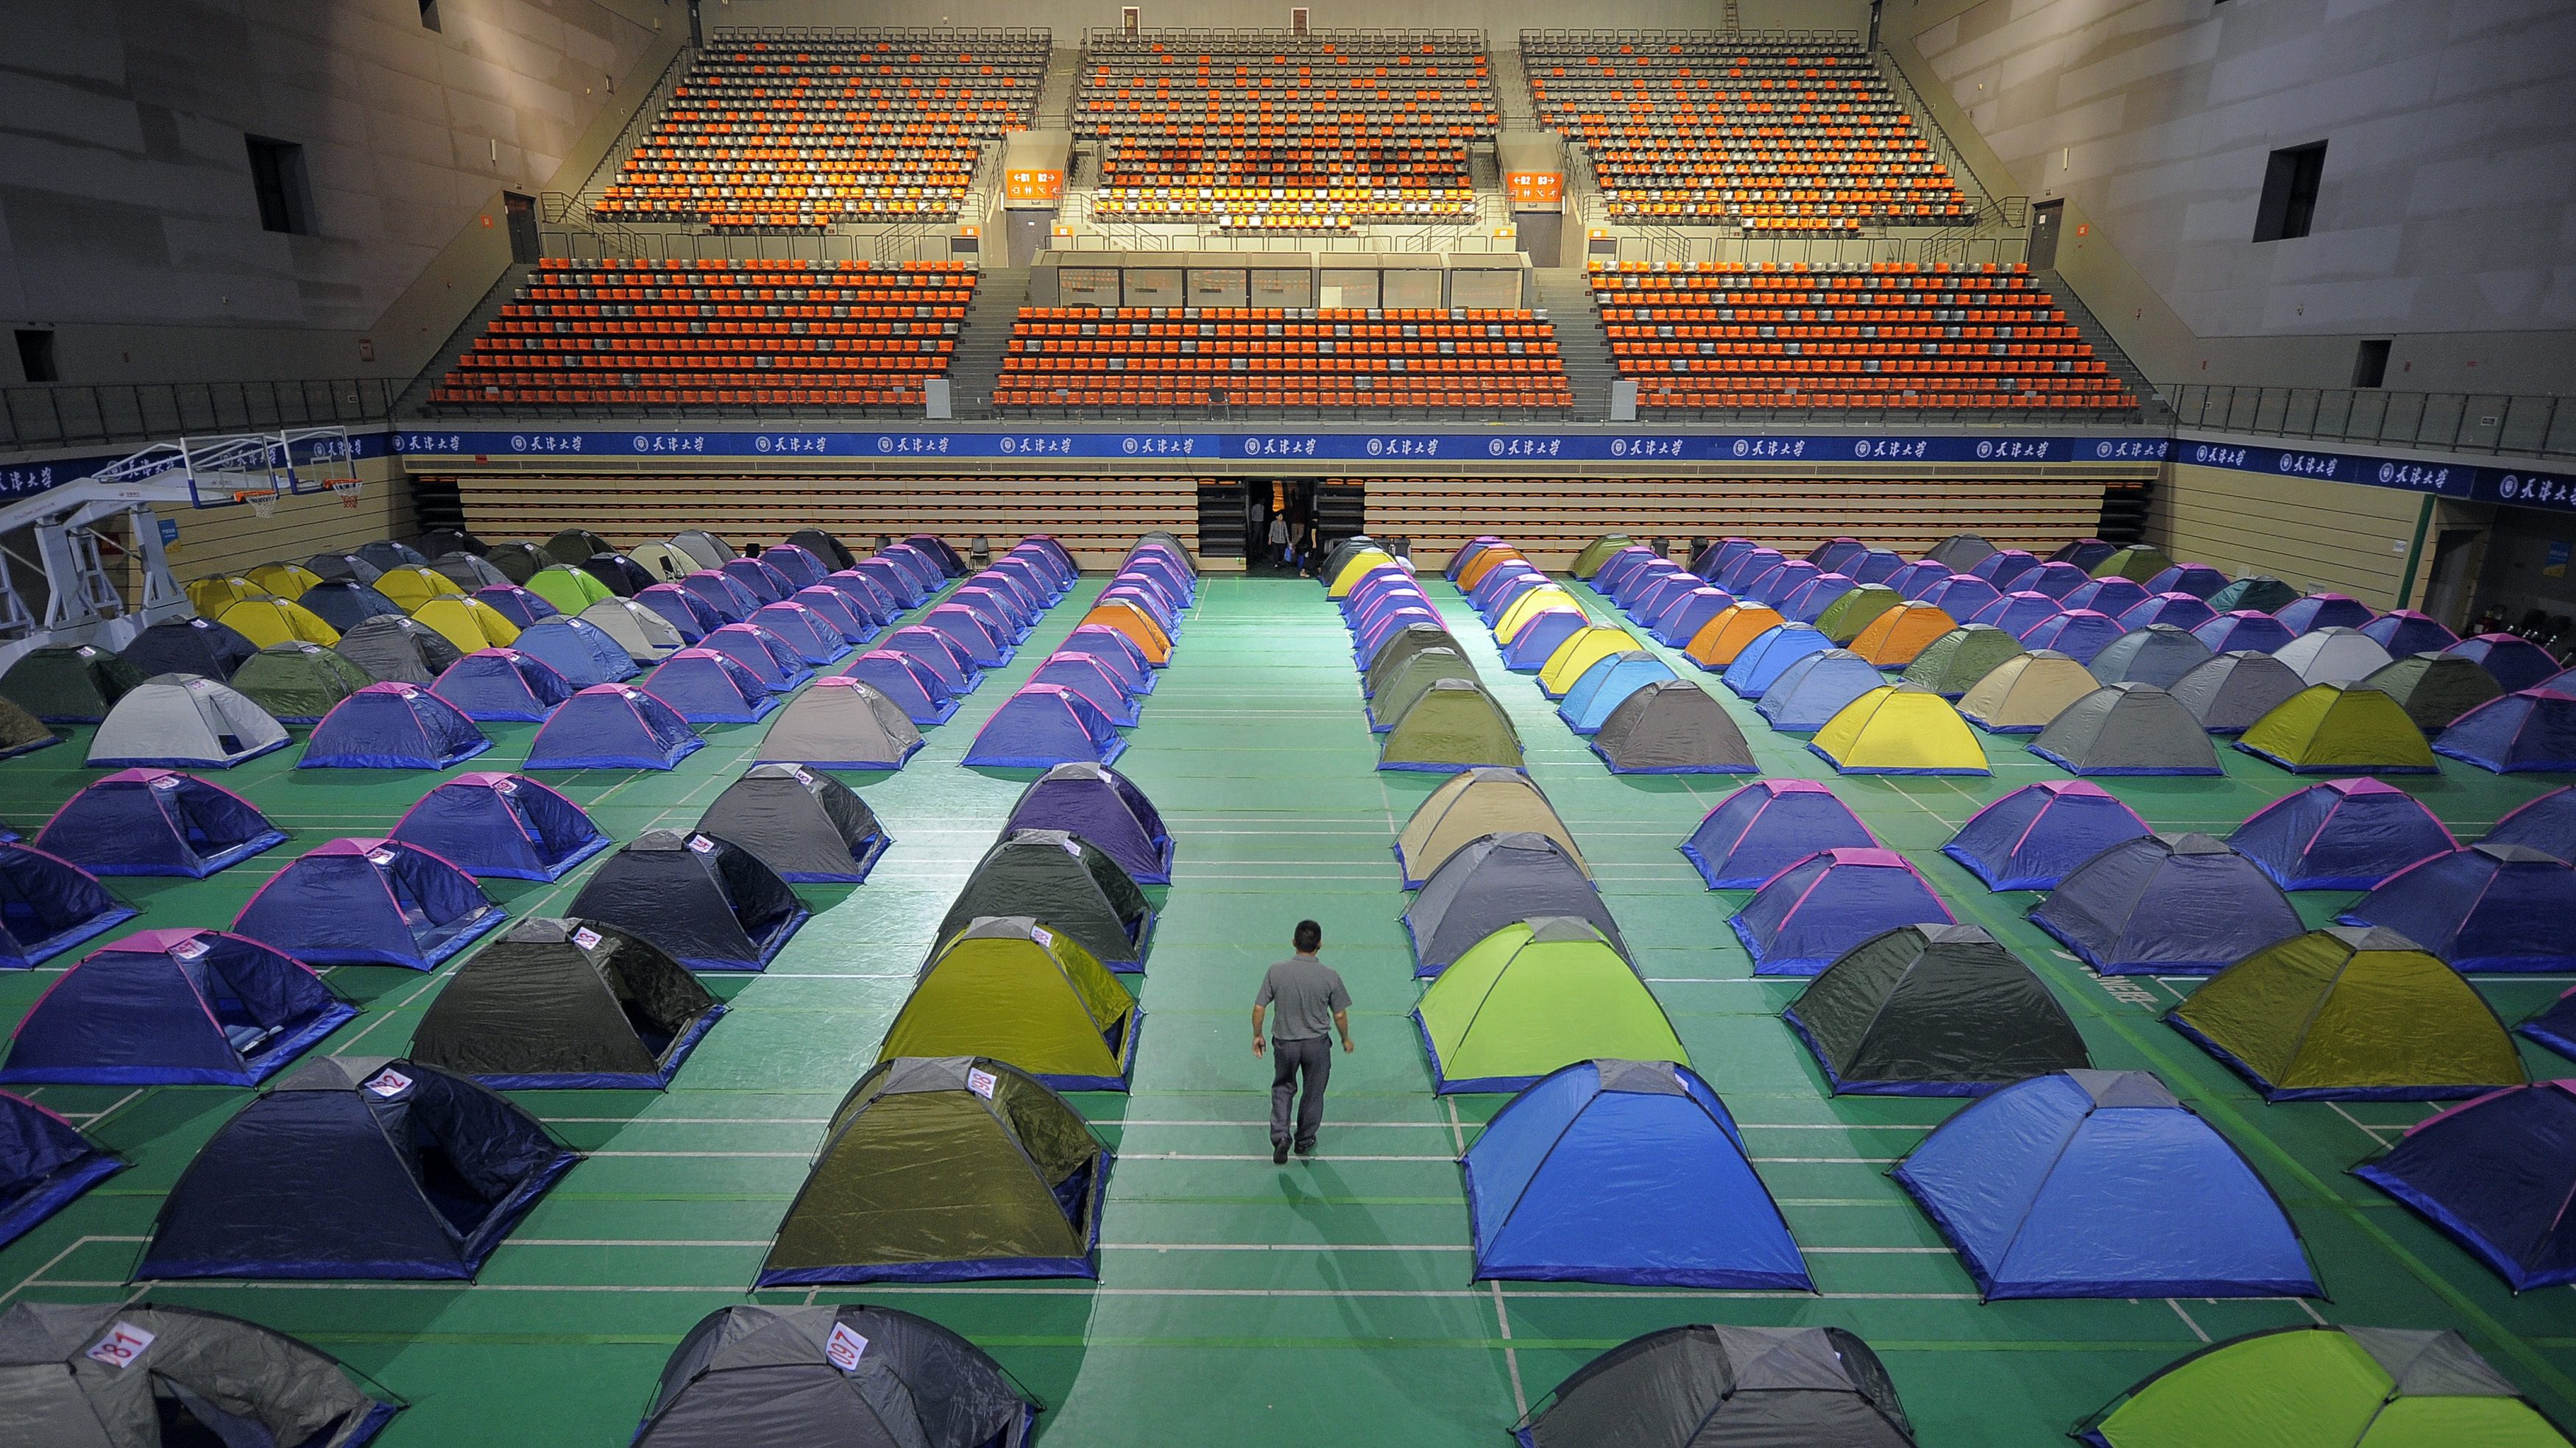 tianjin-university-set-up-tents-in-2014-e1472718866307.jpg